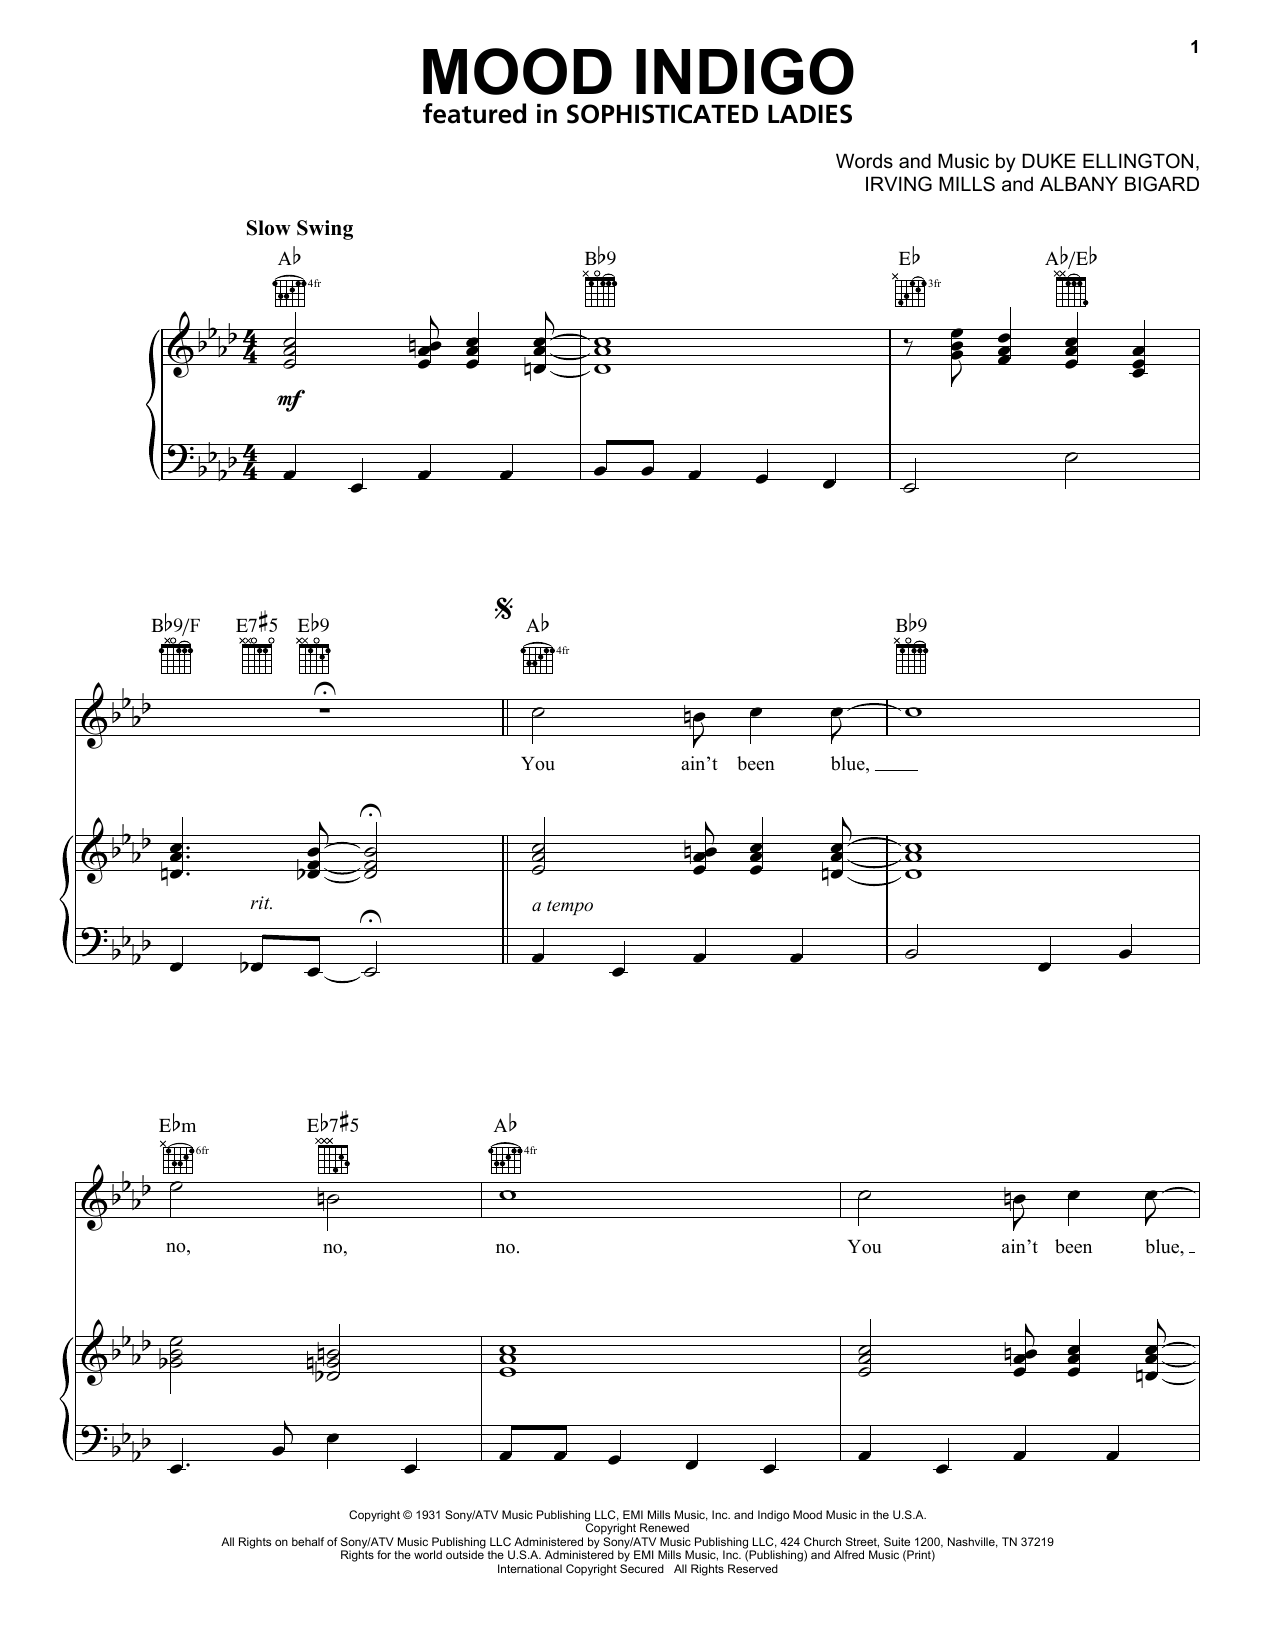 Download Duke Ellington Mood Indigo Sheet Music and learn how to play Tenor Saxophone PDF digital score in minutes